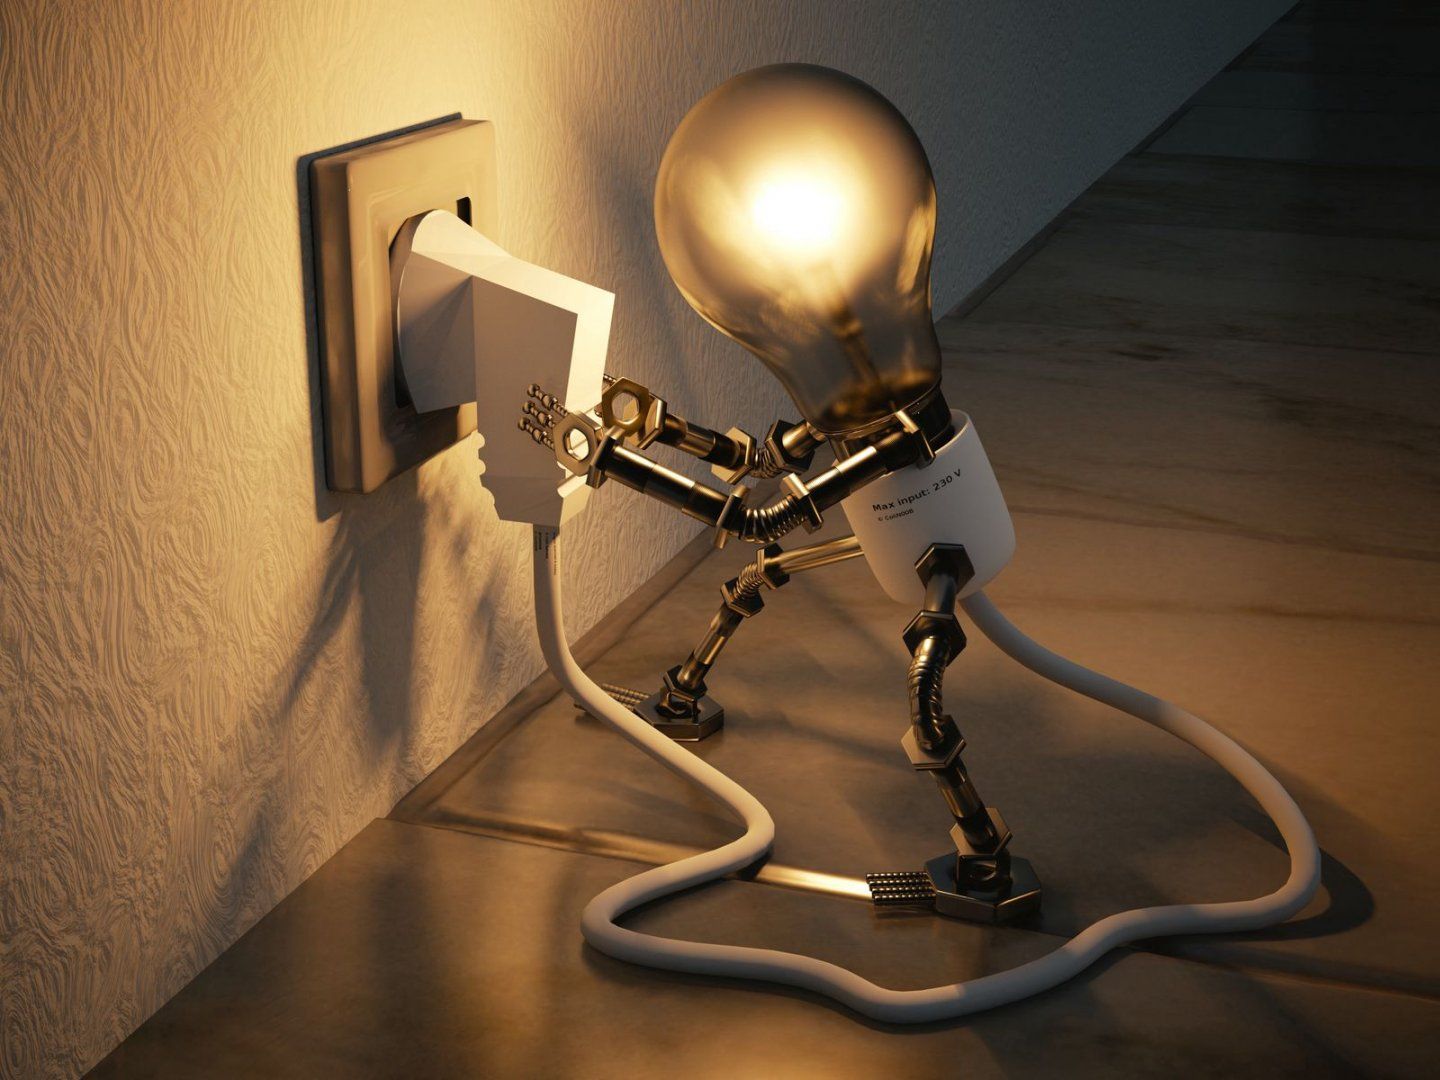 lamp_outlet_idea_electricity_120422_1600x1200.jpg